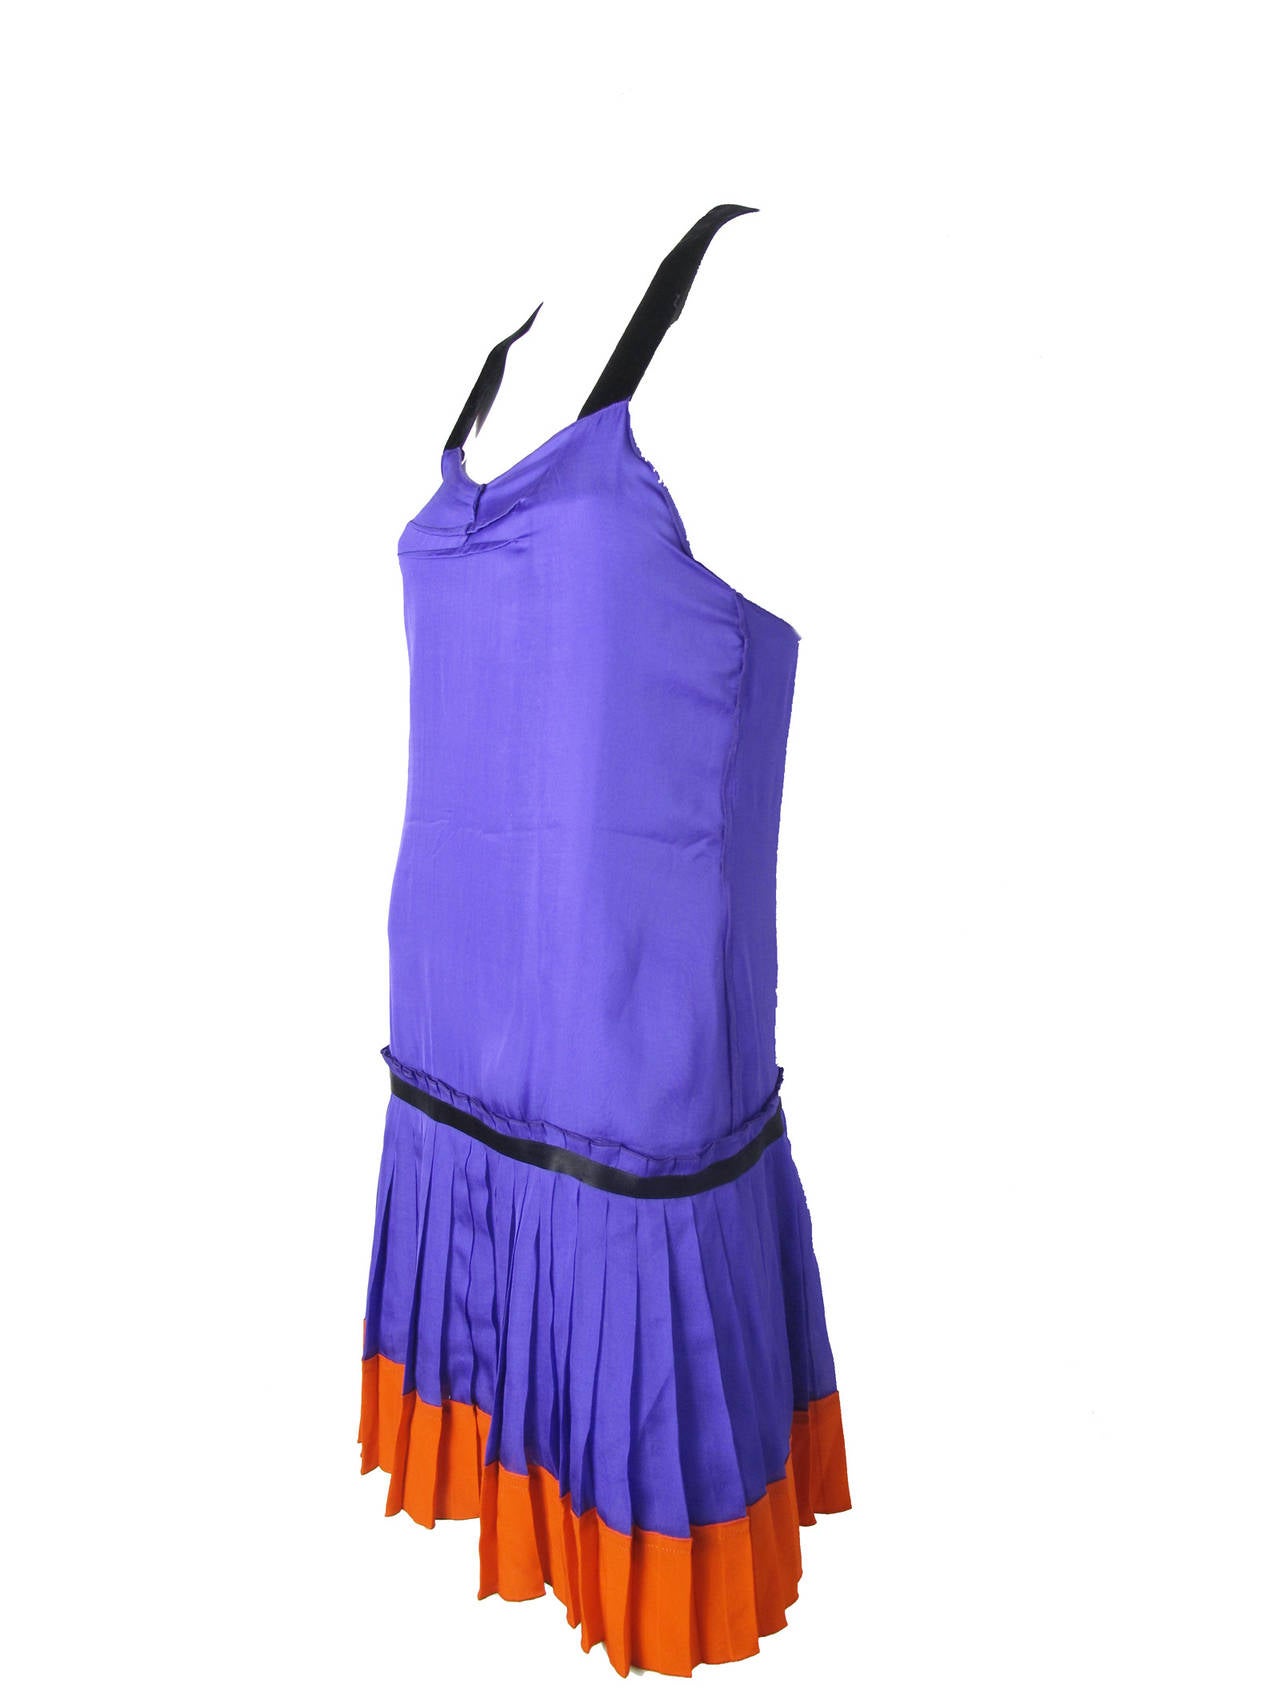 Dolce & Gabbana purple silk and orange pleated dress with criss cross velvet straps.  34